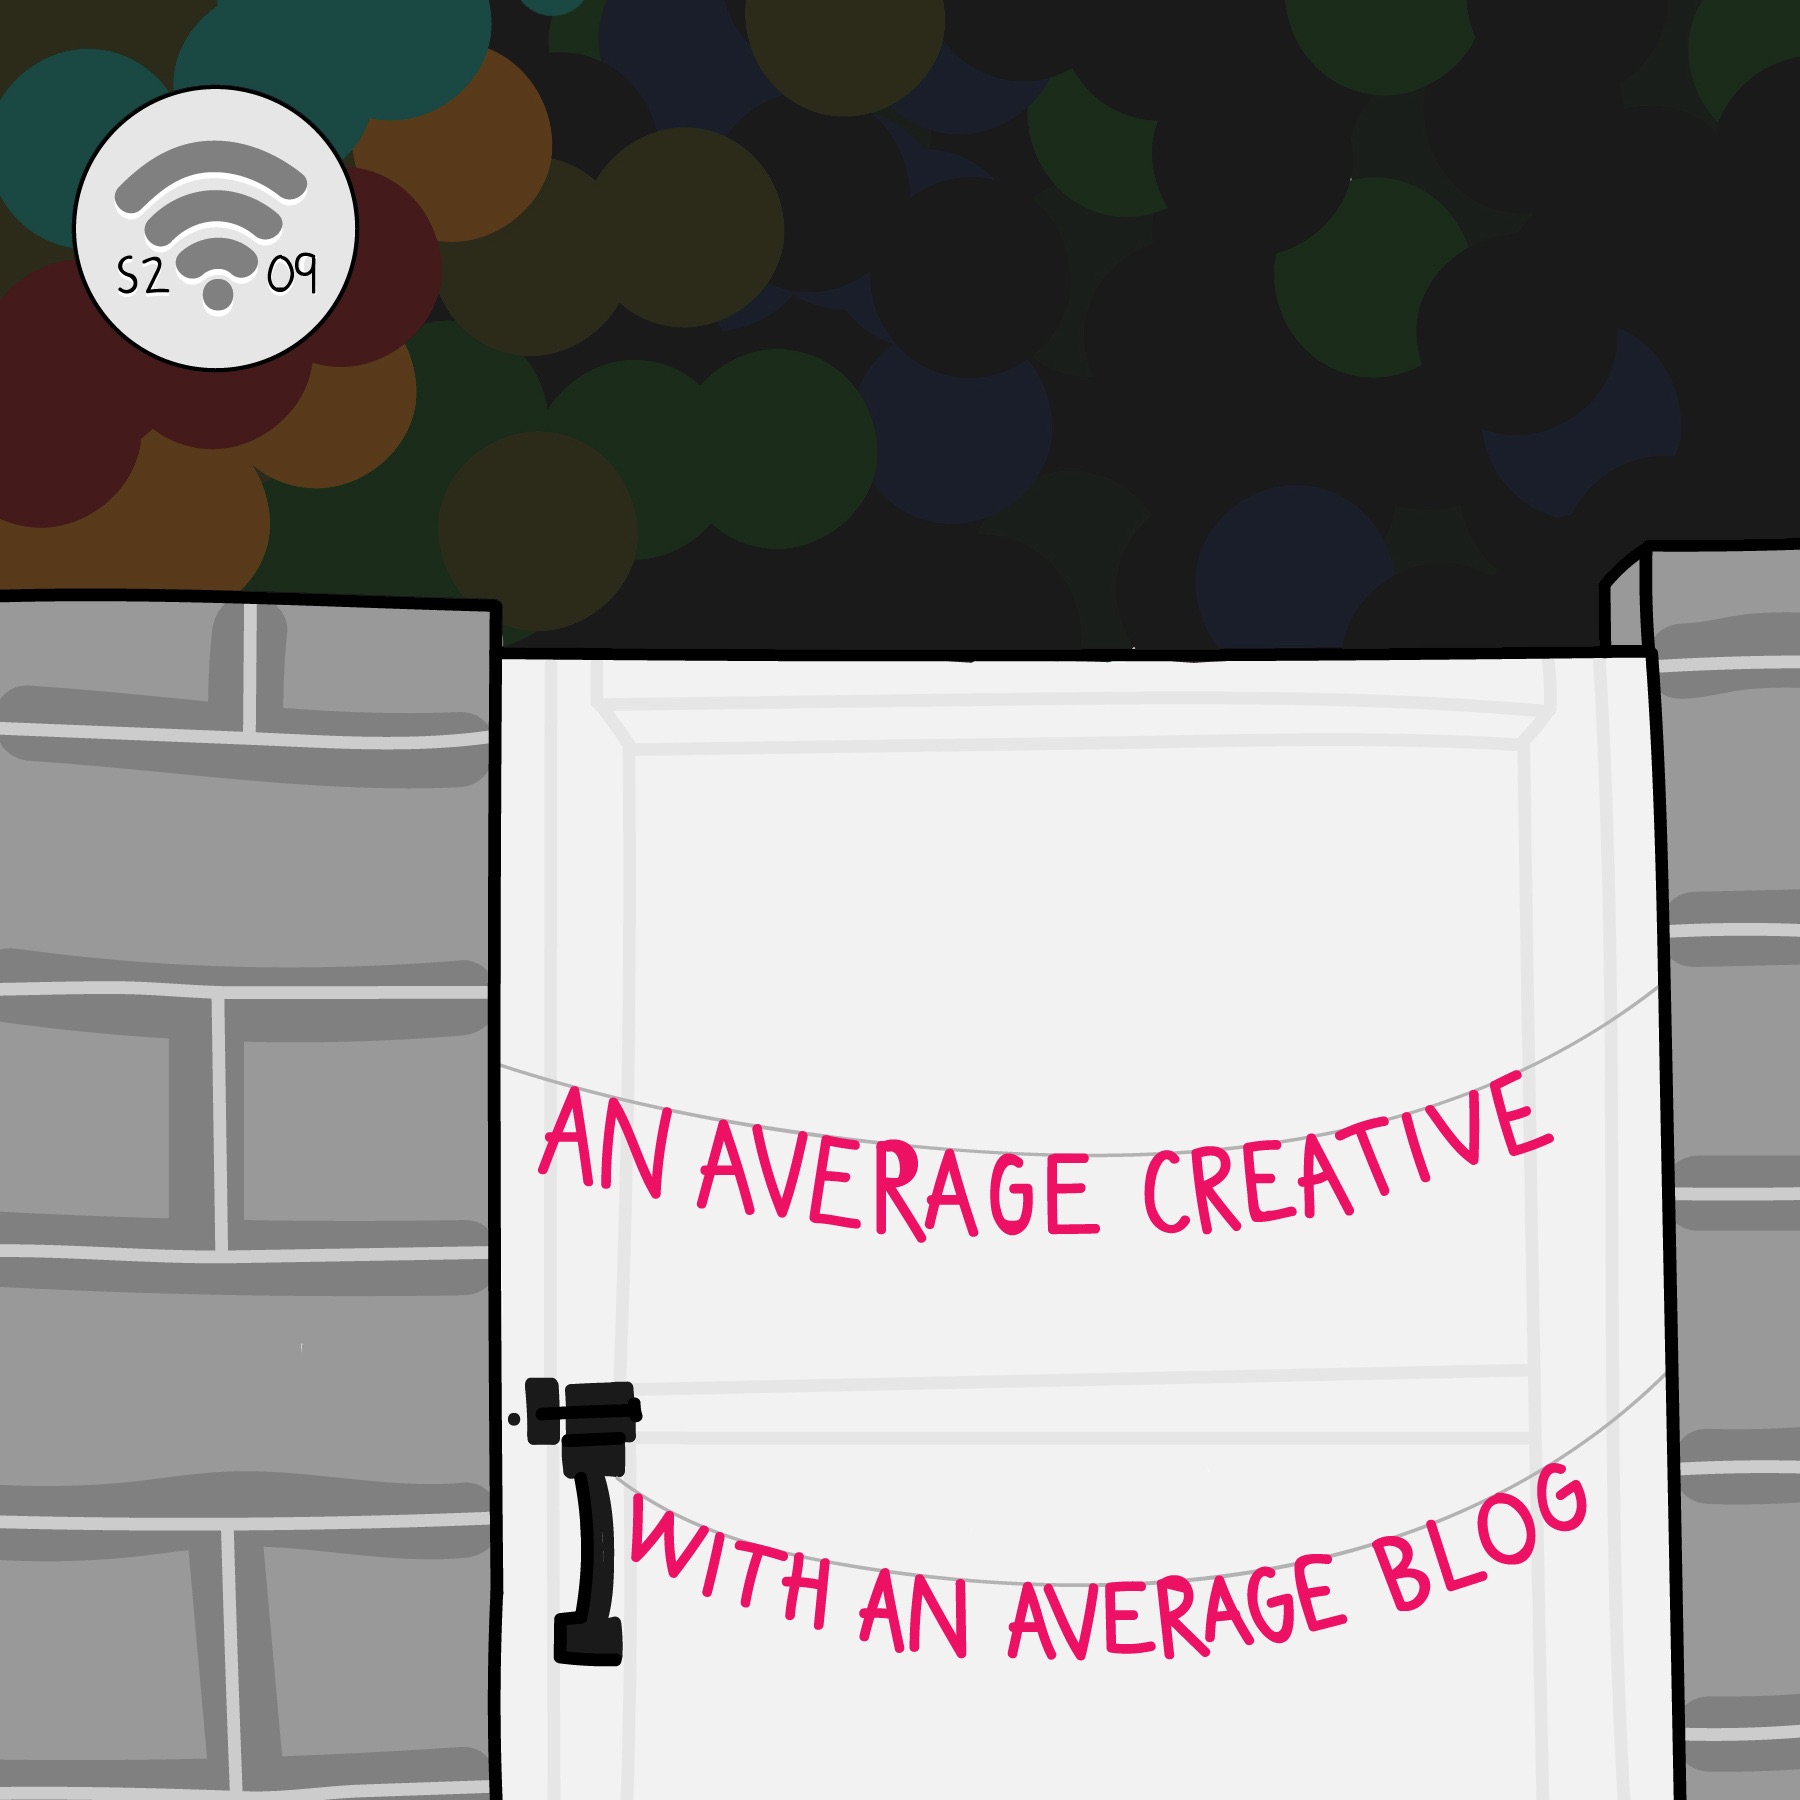 S2E9 an average creative with an average blog